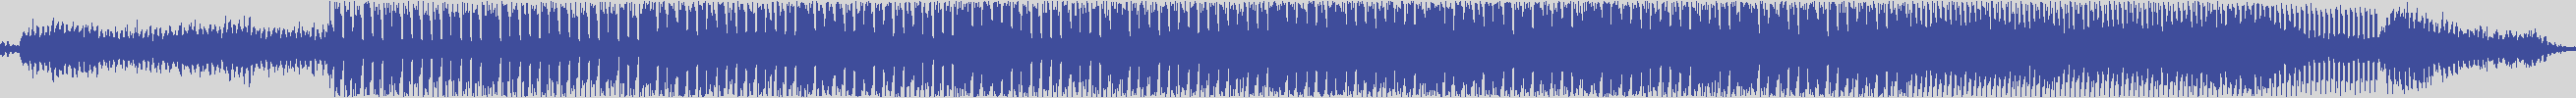 vitti_records [VIT012] Torrens - Kau [Original Mix] audio wave form